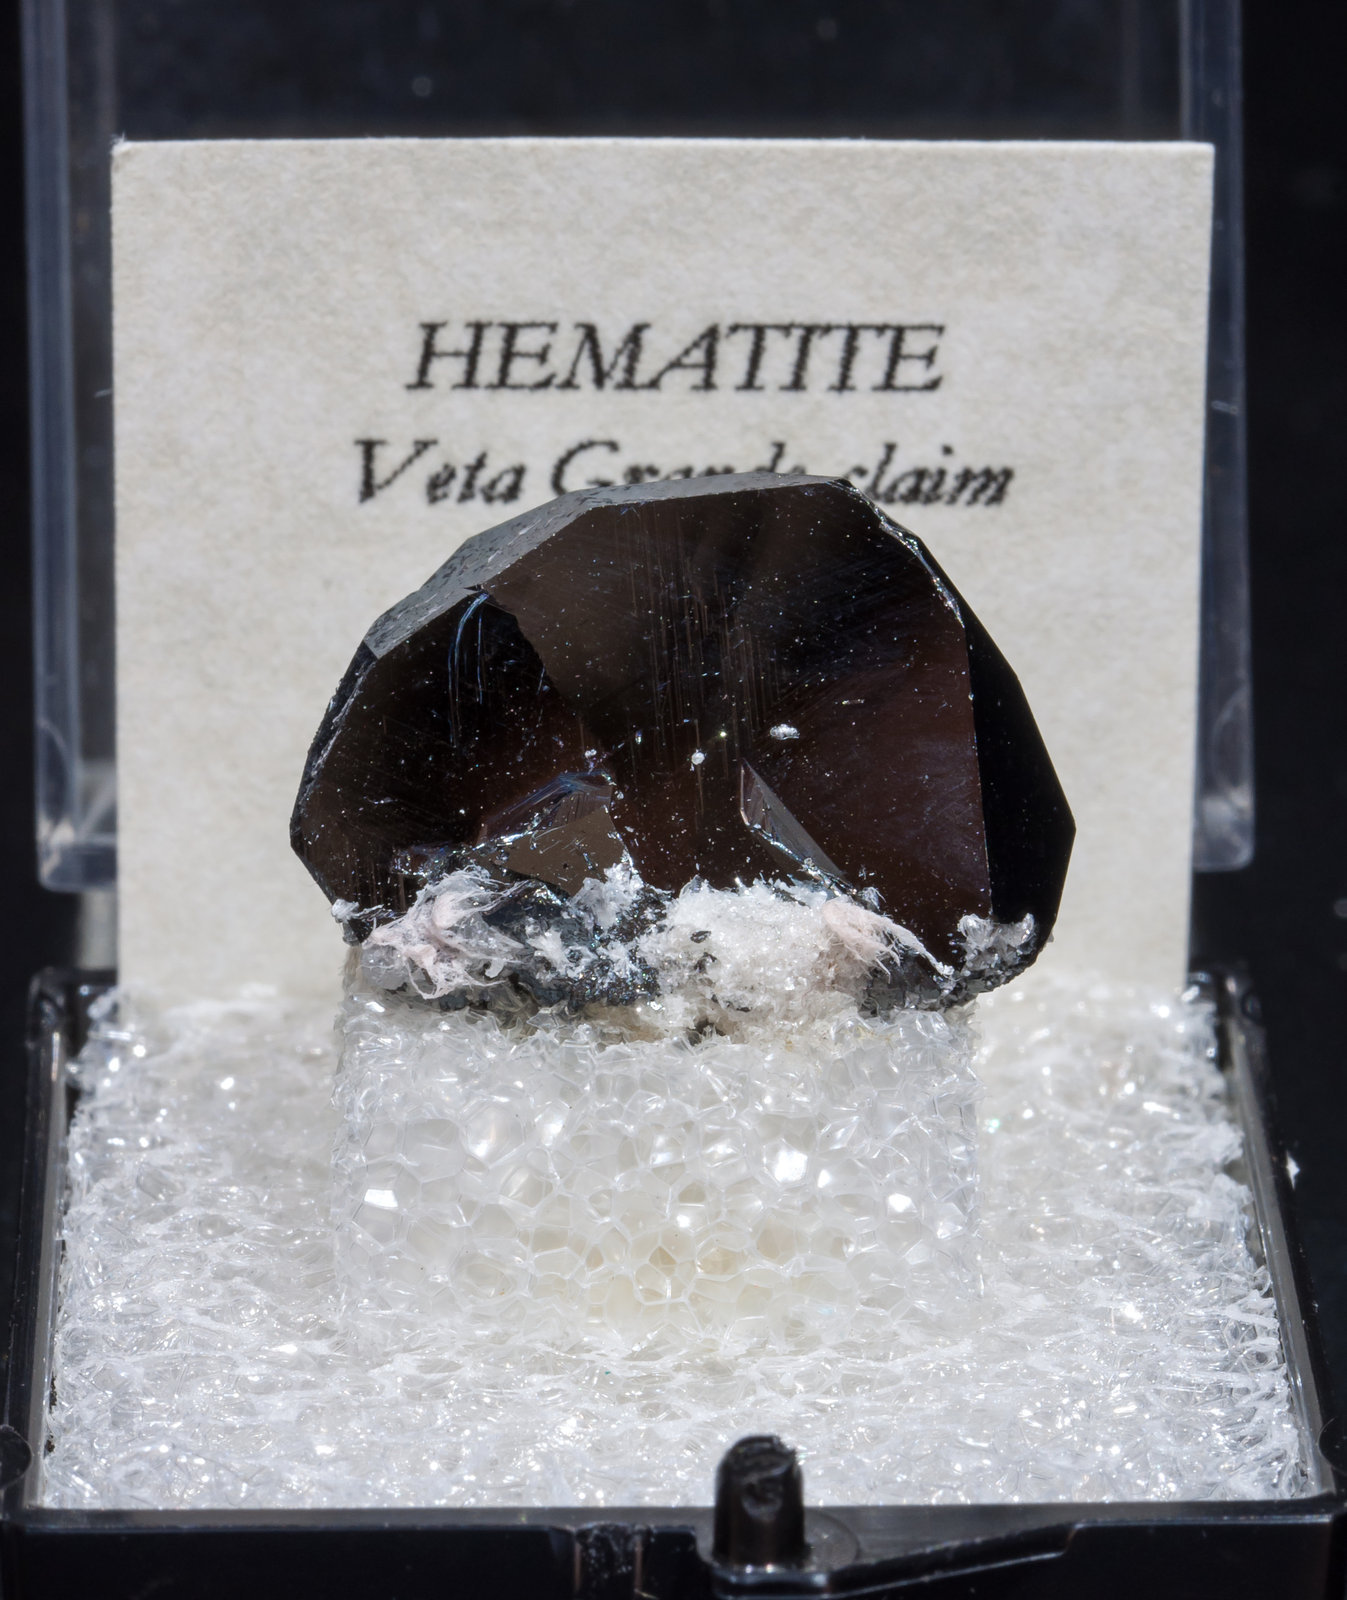 specimens/s_imagesAH6/Hematite-MF37AH6f1.jpg